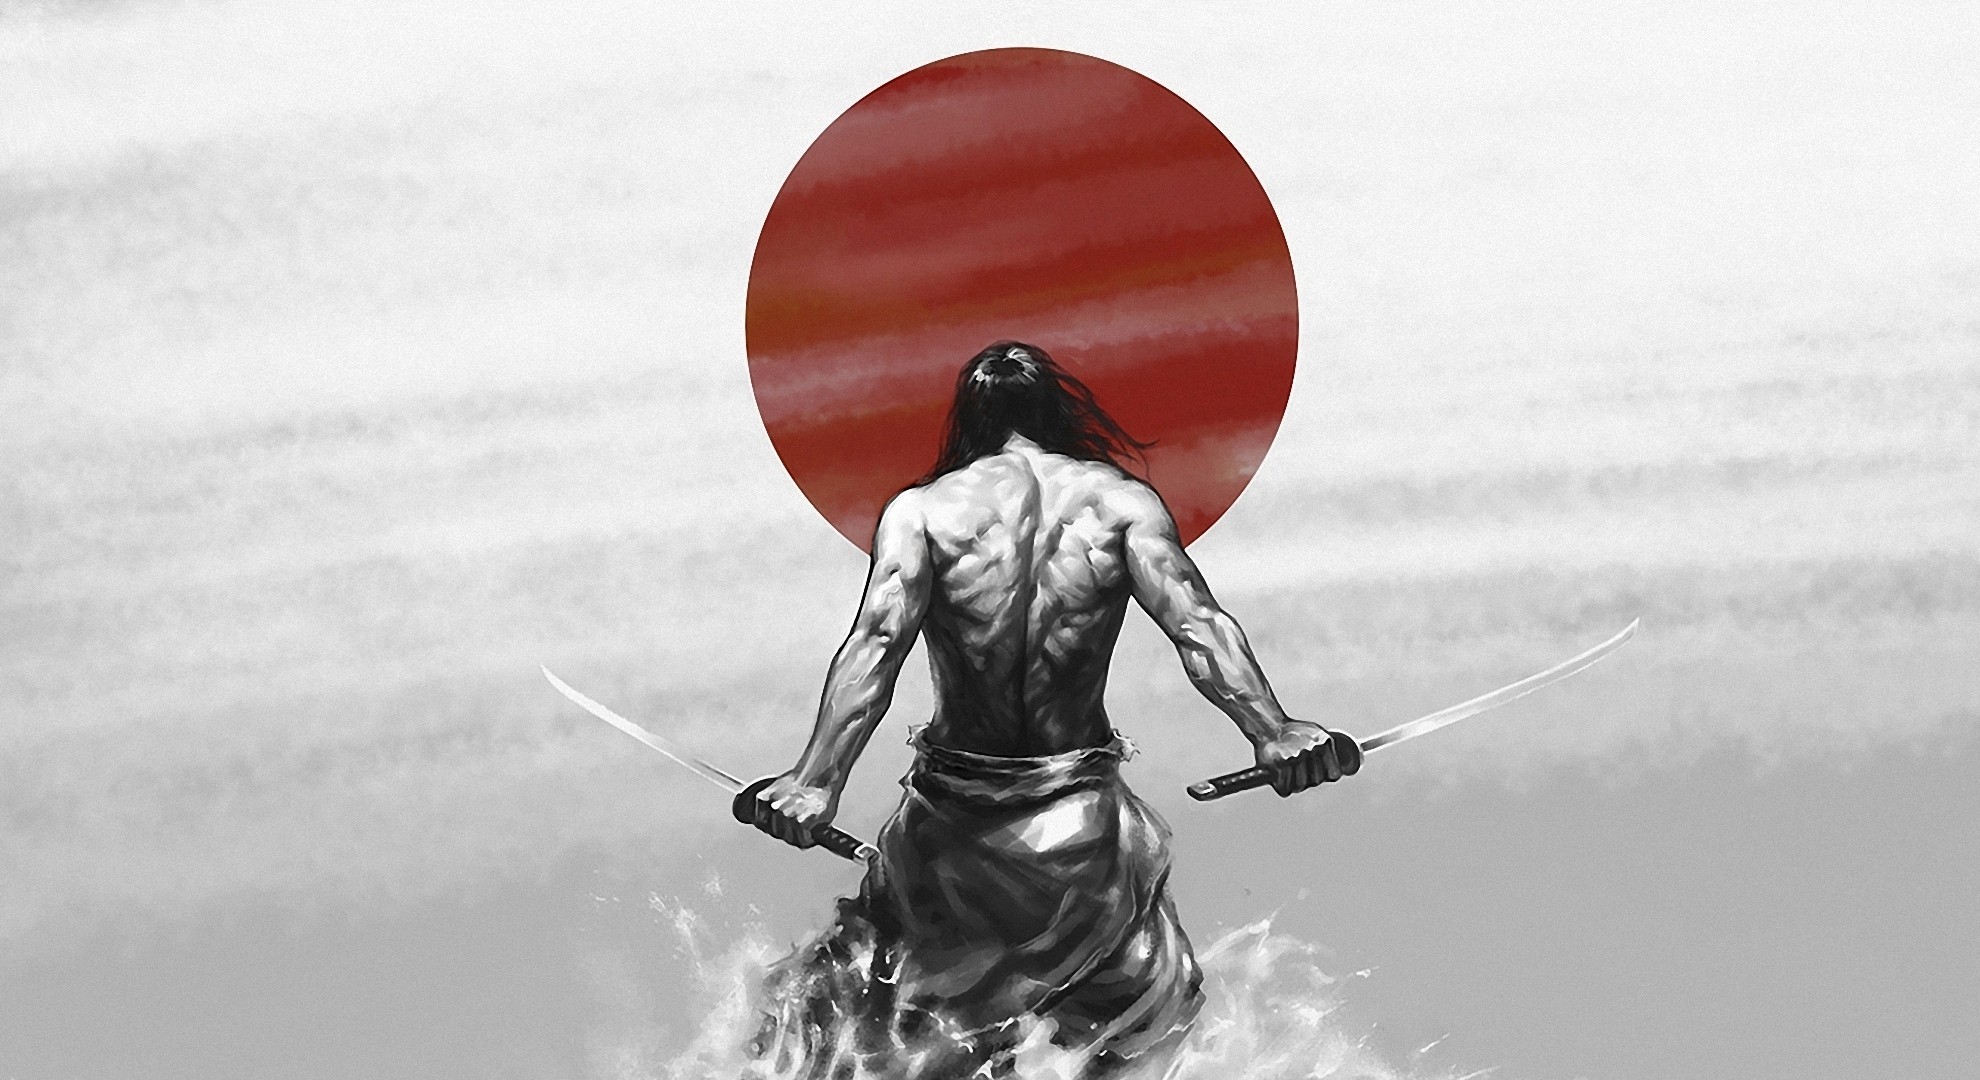 General 1980x1080 sword katana samurai warrior fantasy art selective coloring weapon muscular